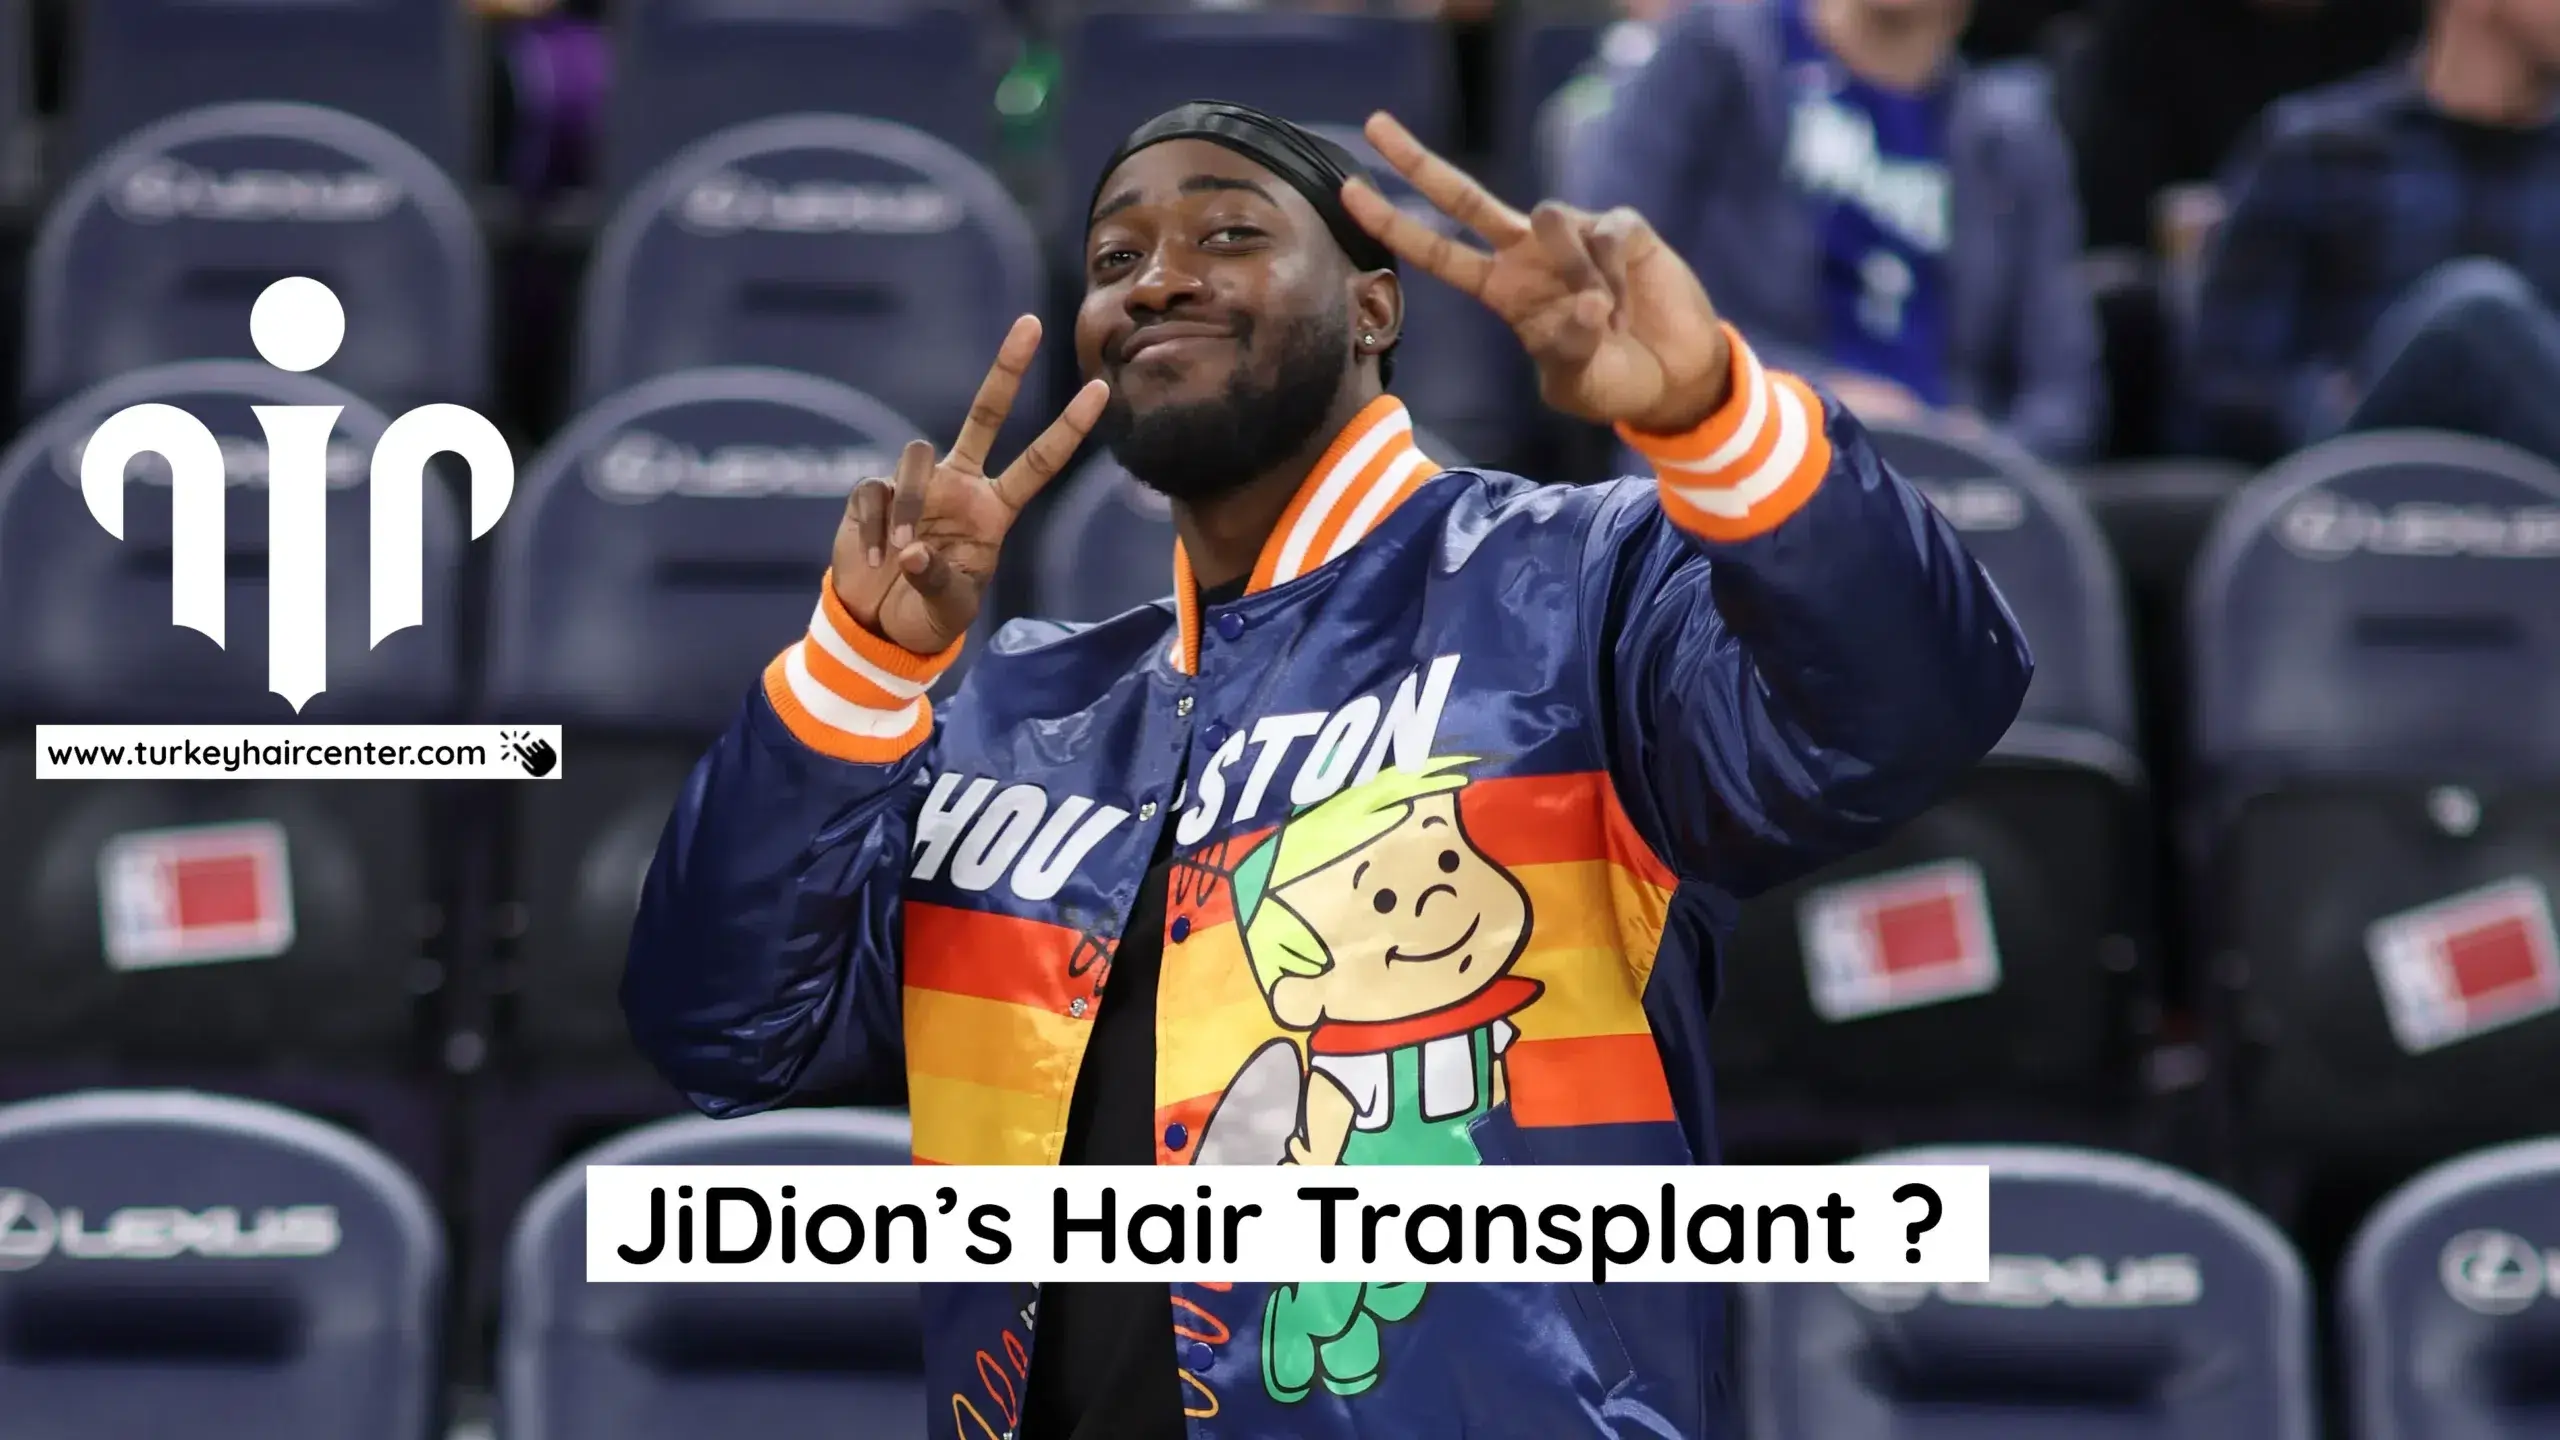 jidion hair transplant operation turkey hair center 1 scaled 1